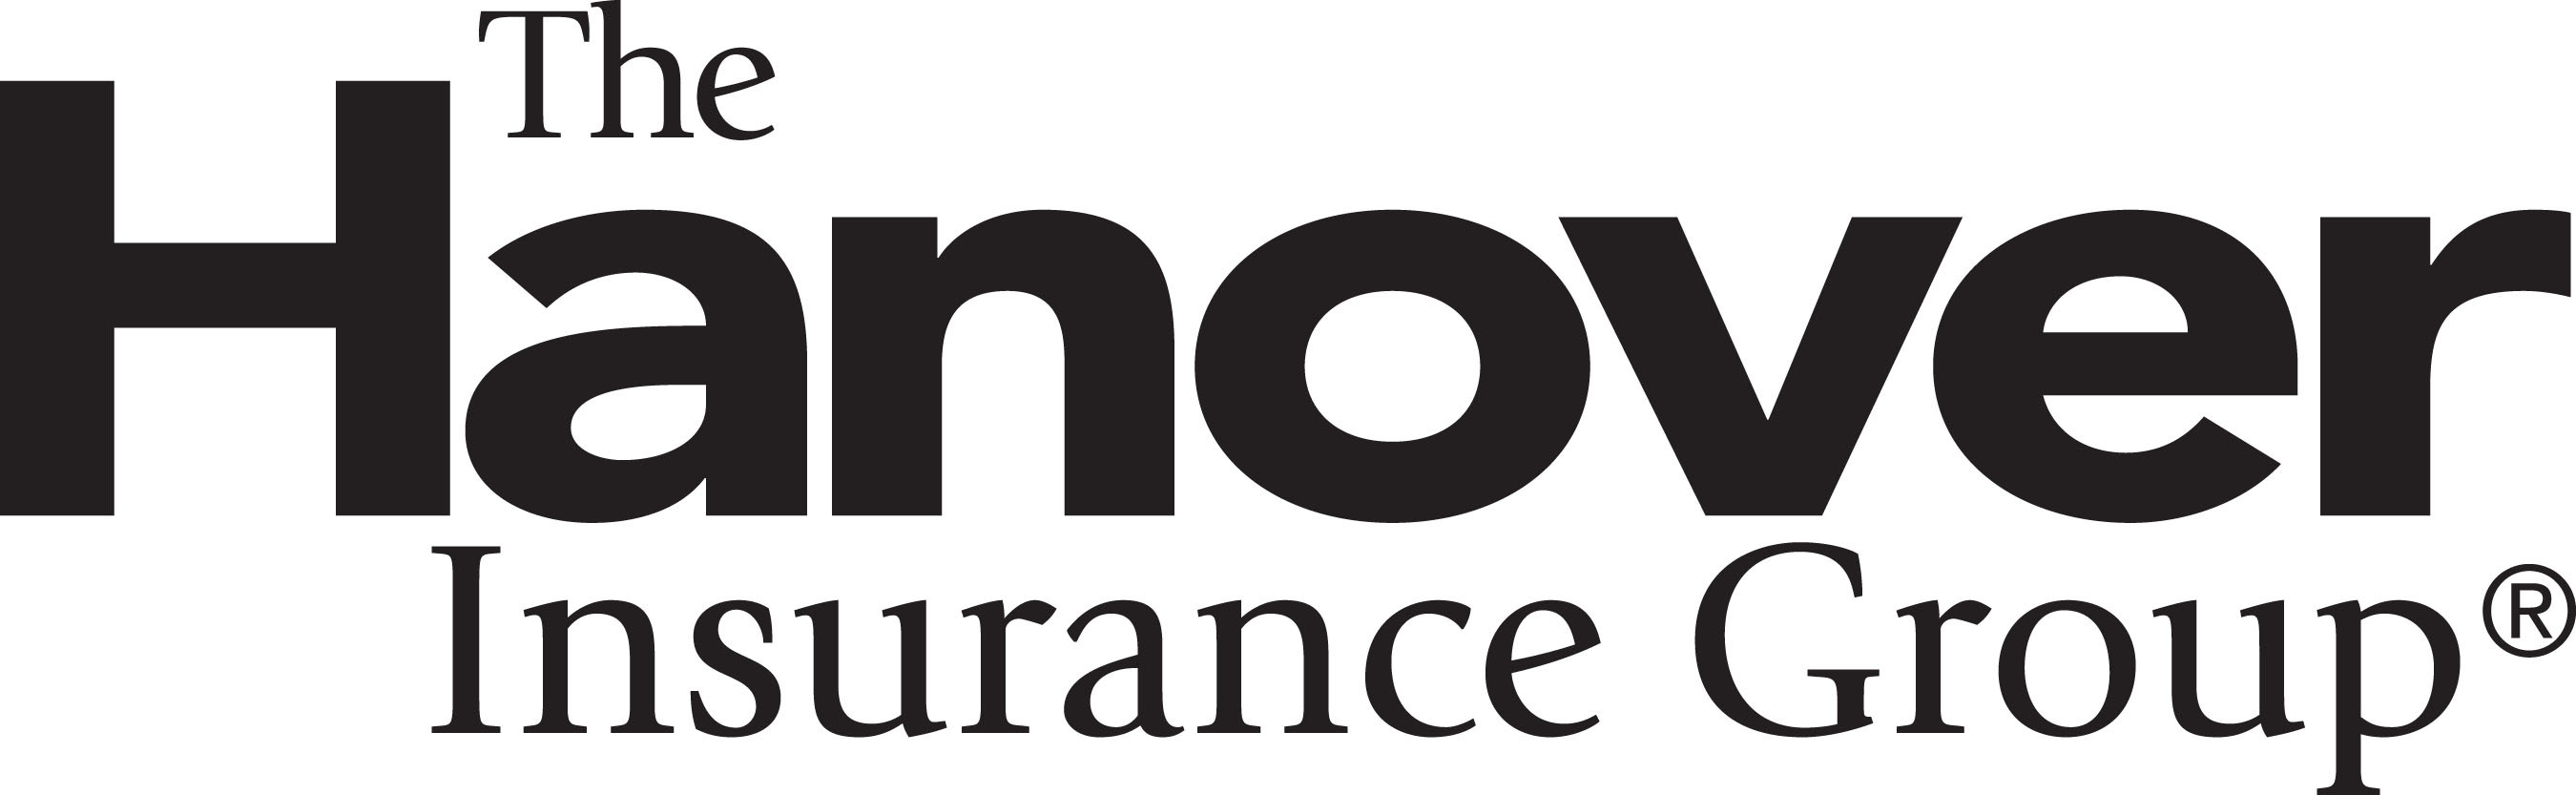 The Hanover Insurance Group, Inc. Logo. (PRNewsFoto/The Hanover Insurance Group, Inc.) (PRNewsFoto/)